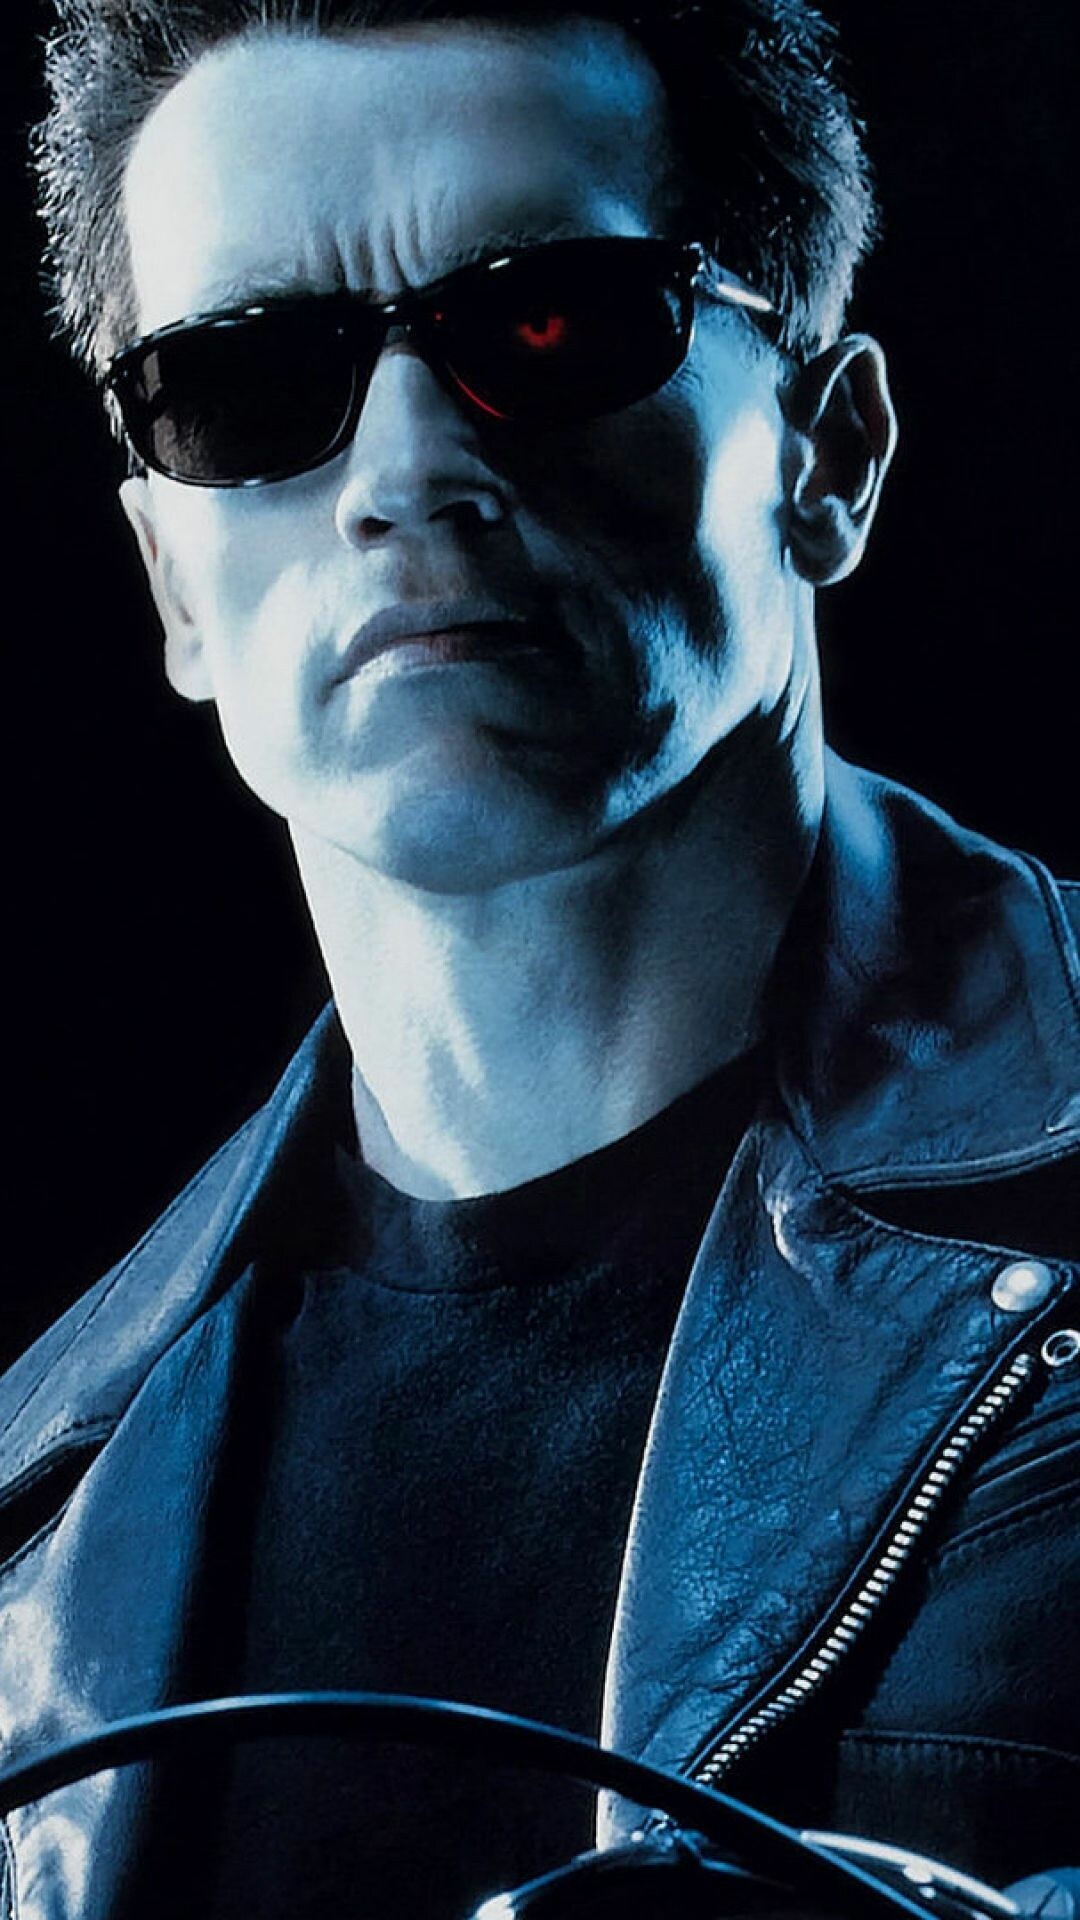 Arnold Schwarzenegger: Terminator 2: Judgment Day, Model 101, T-800, An Austrian and American actor. 1080x1920 Full HD Wallpaper.